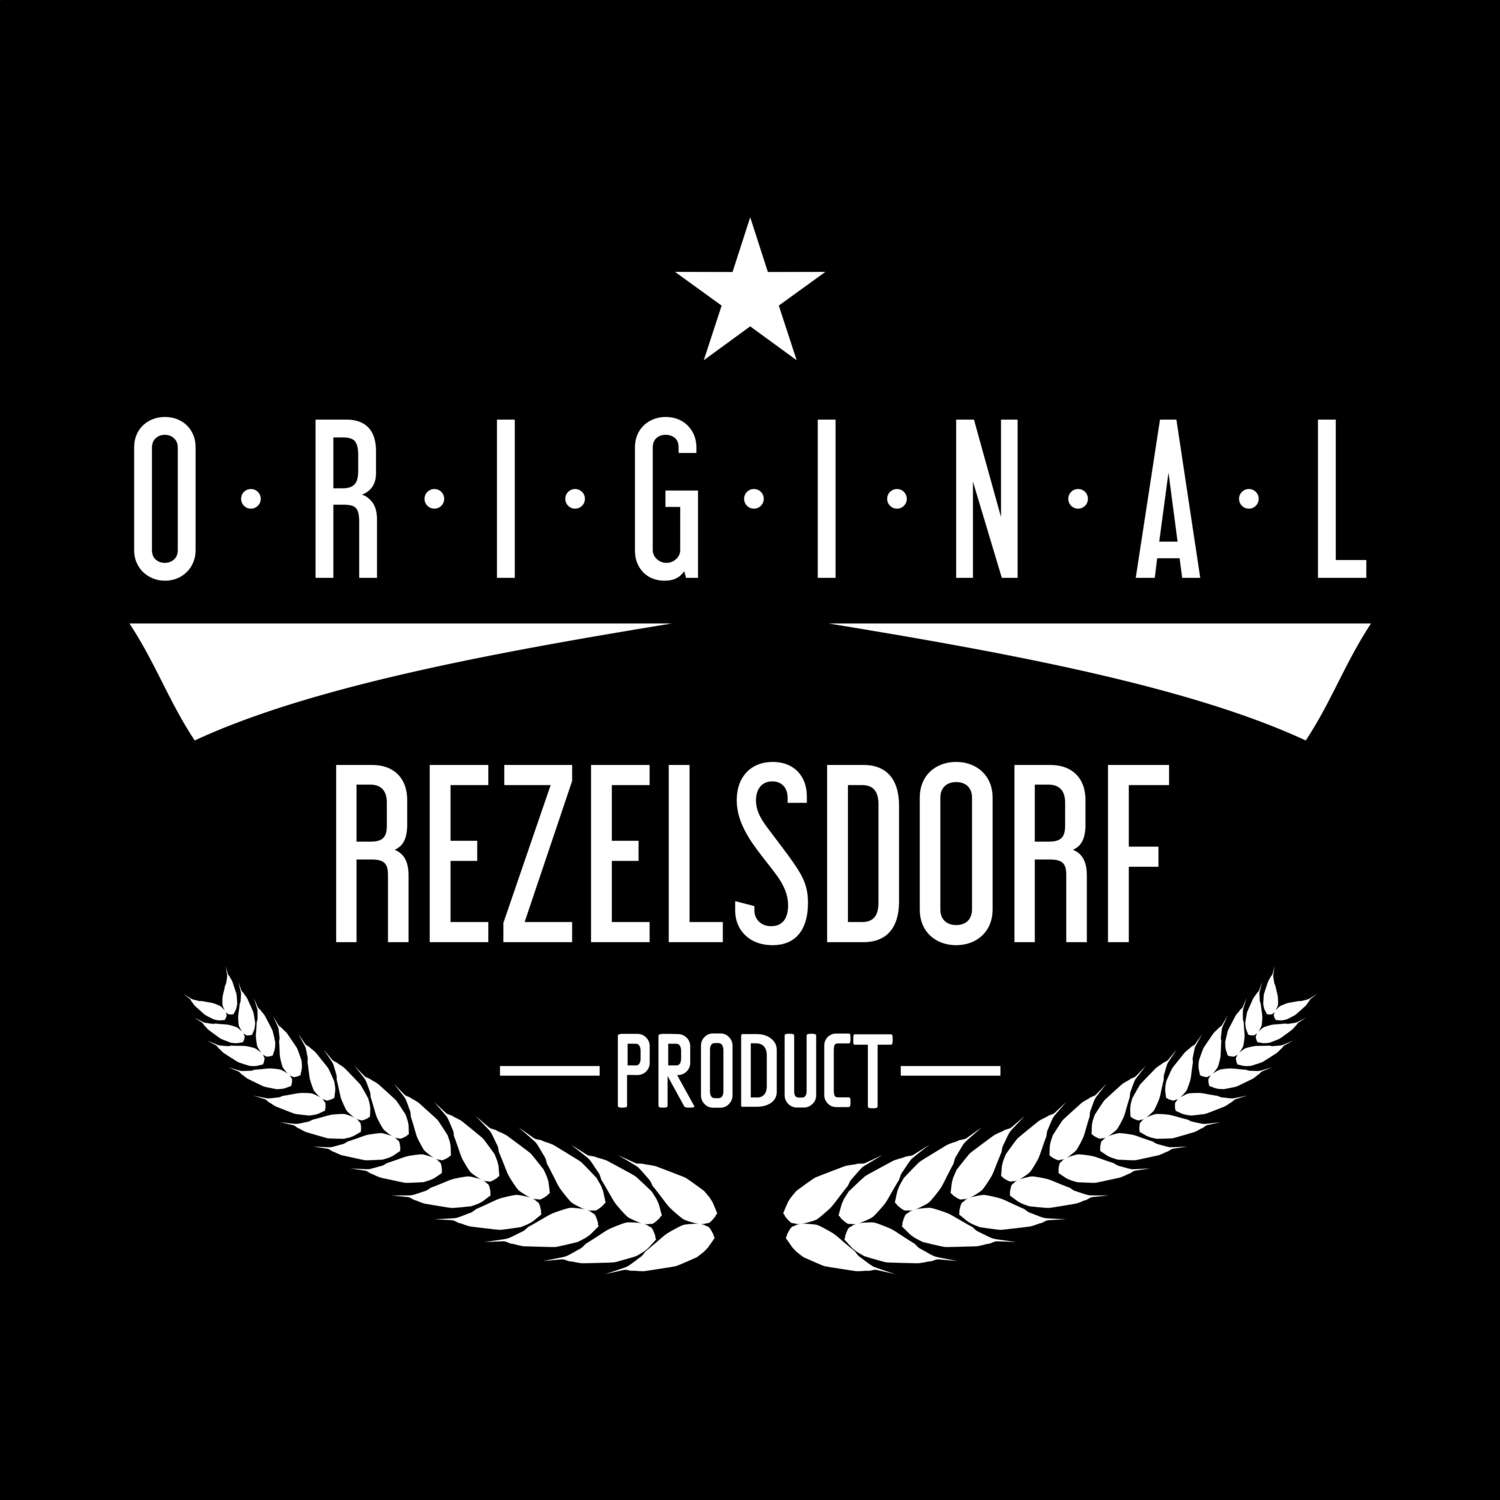 Rezelsdorf T-Shirt »Original Product«